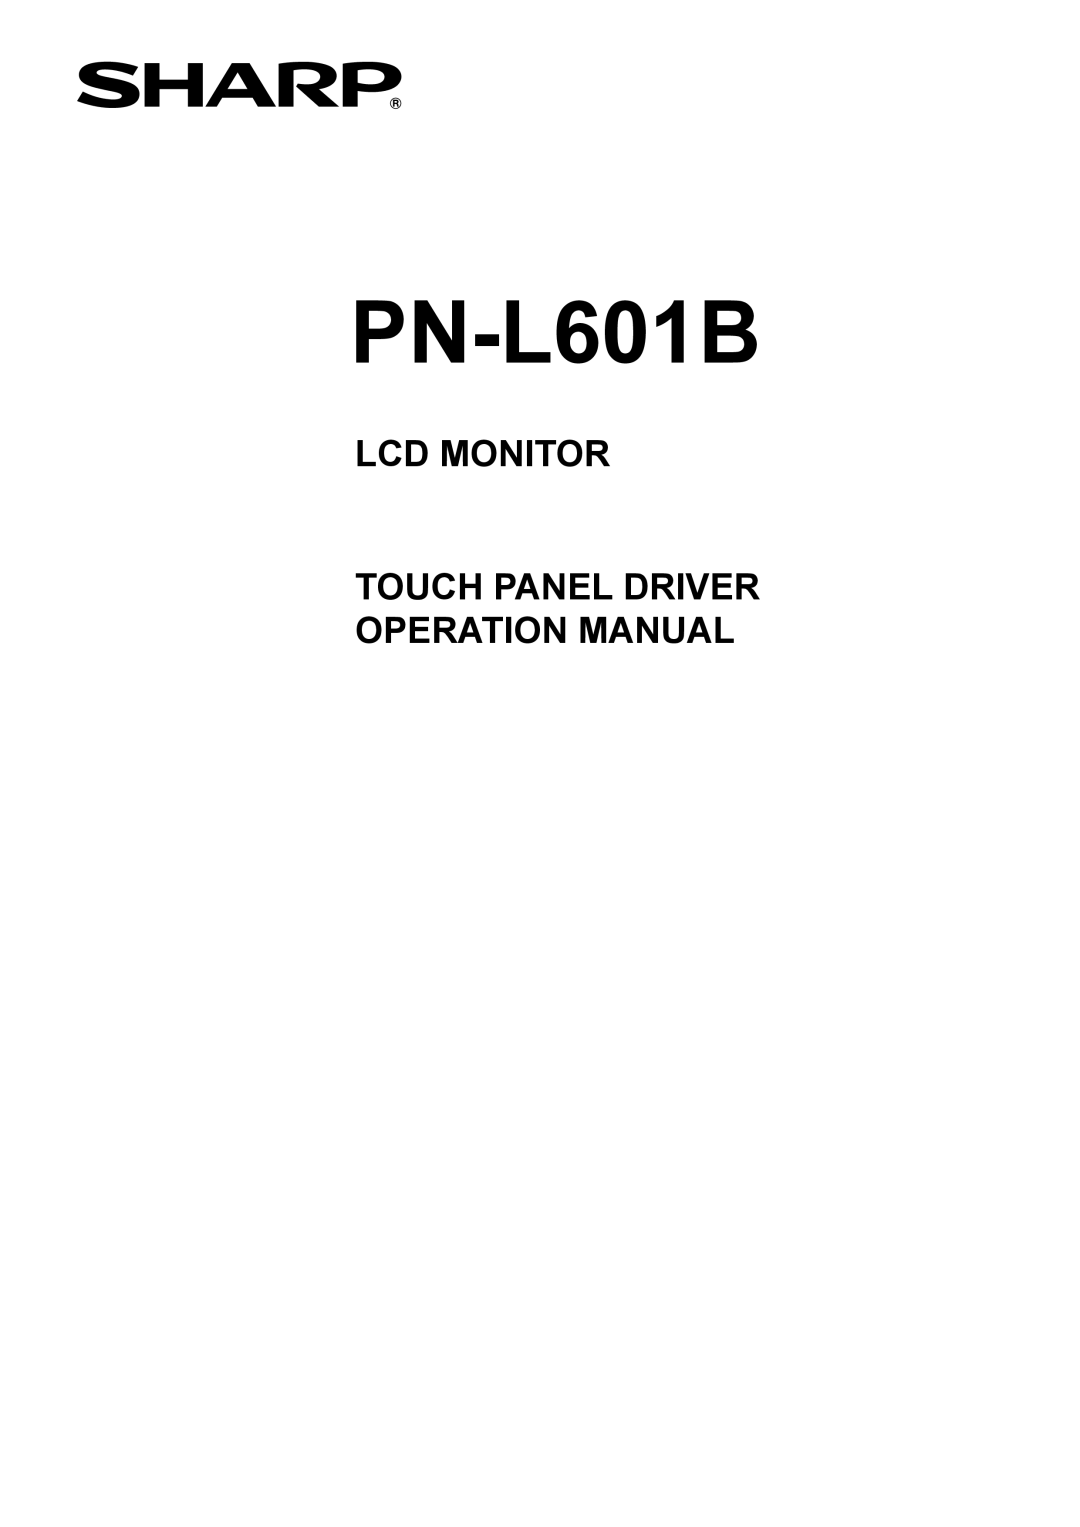 Sharp PN-L601B operation manual Lcd Monitor 